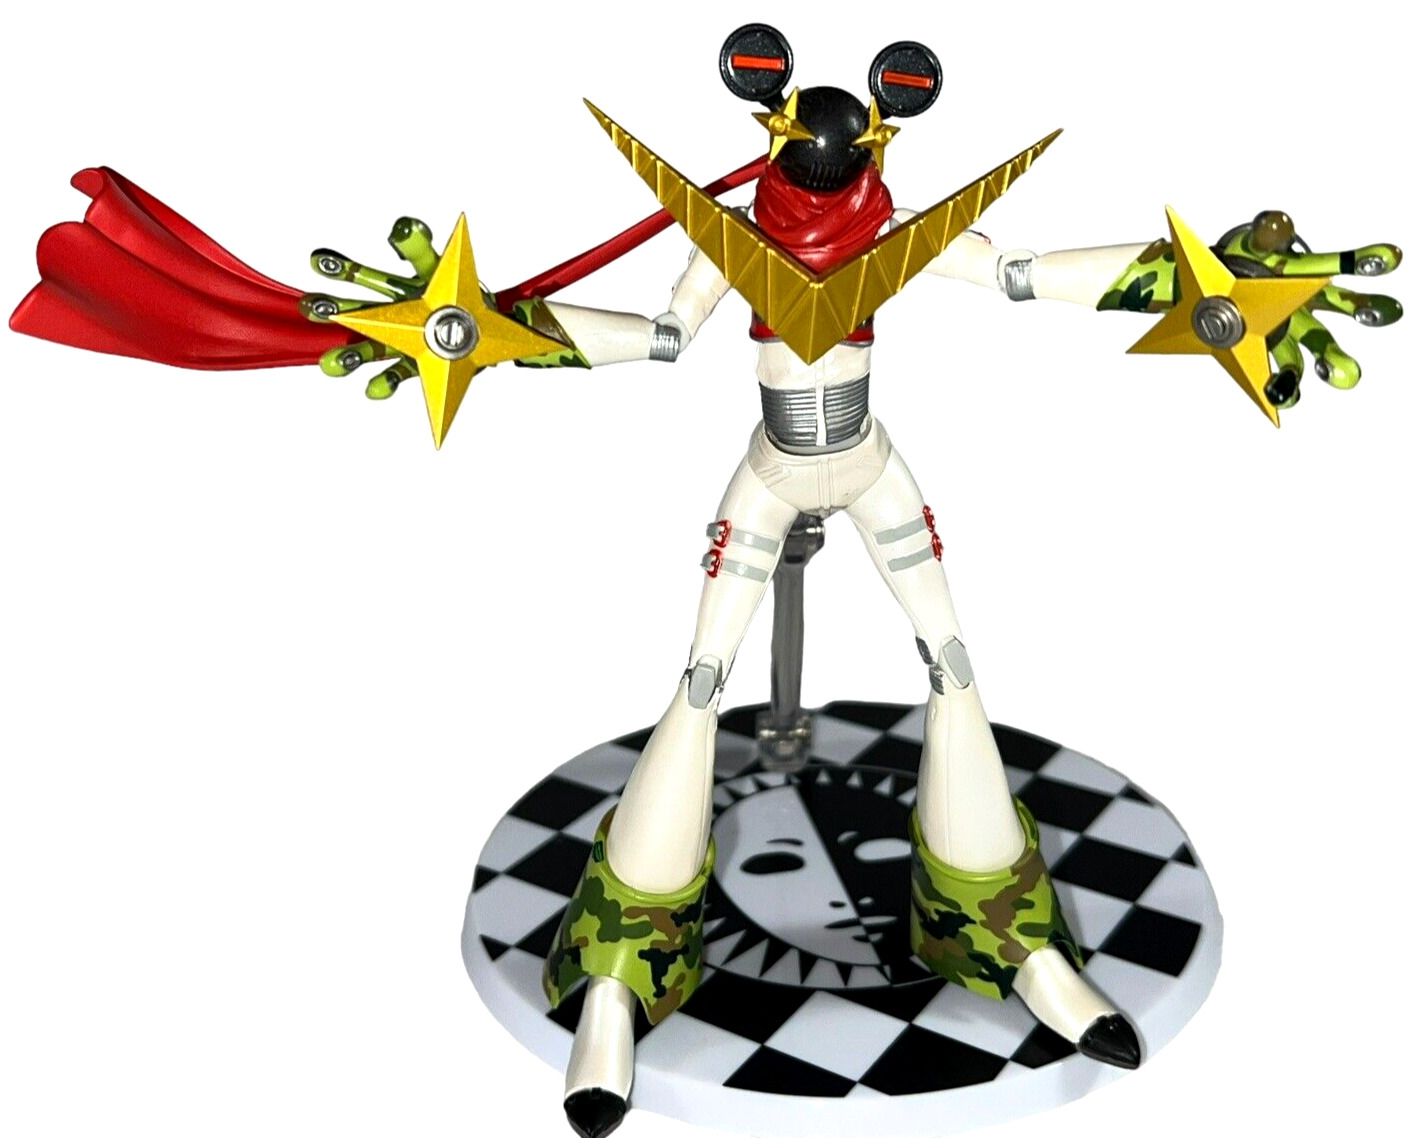 Persona 4 Jiraiya D-Arts Bandai Action Figure the Animation and Model Stand